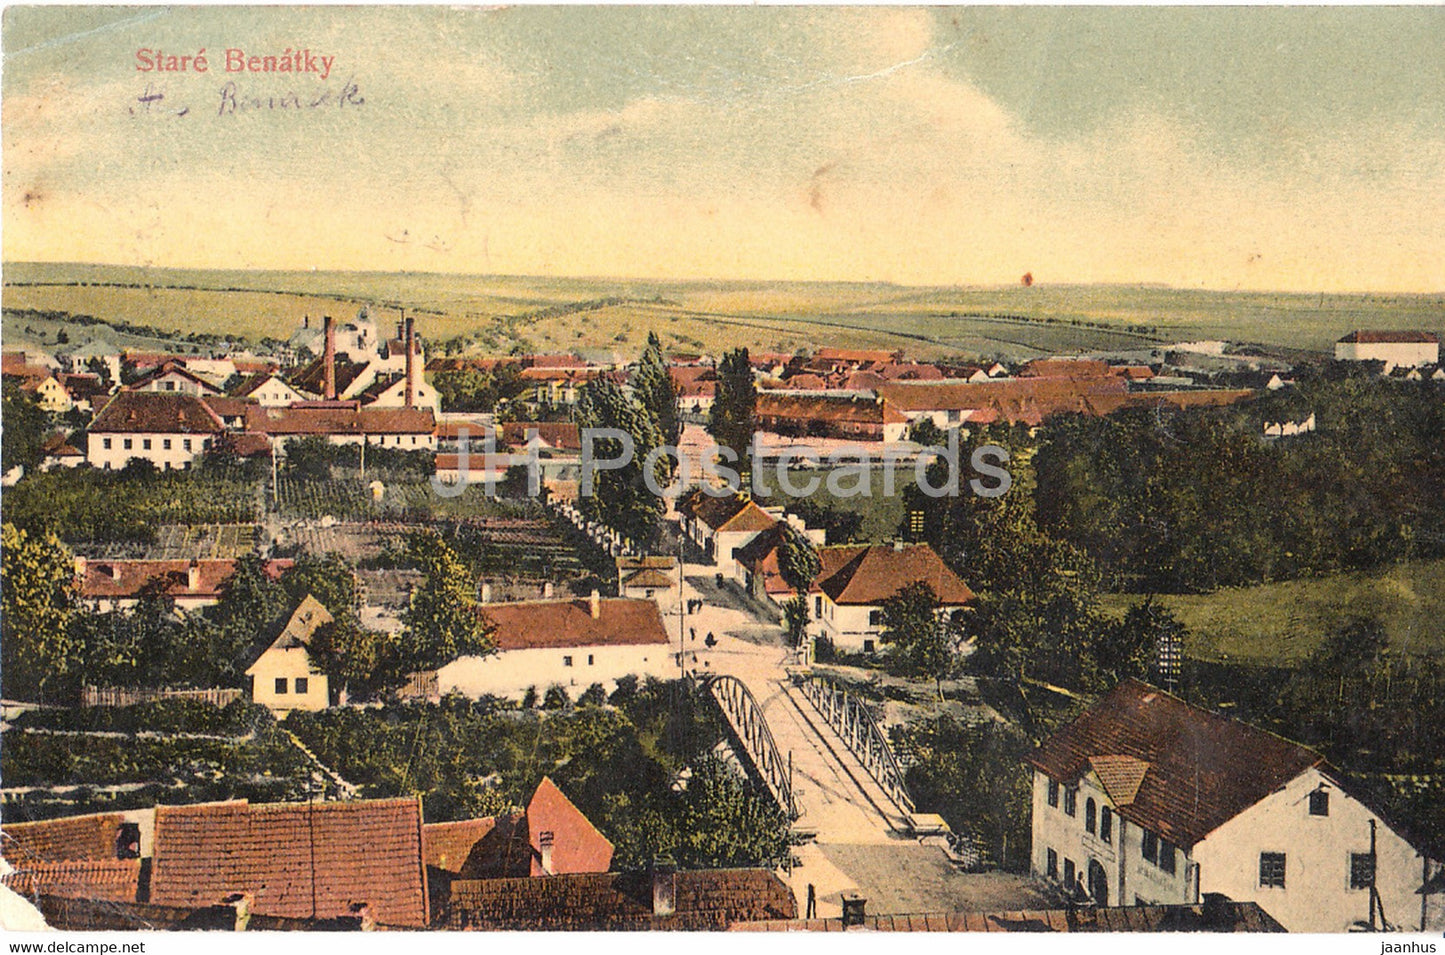 Stare Benatky - old postcard - 1909 - Czech Republic - used - JH Postcards